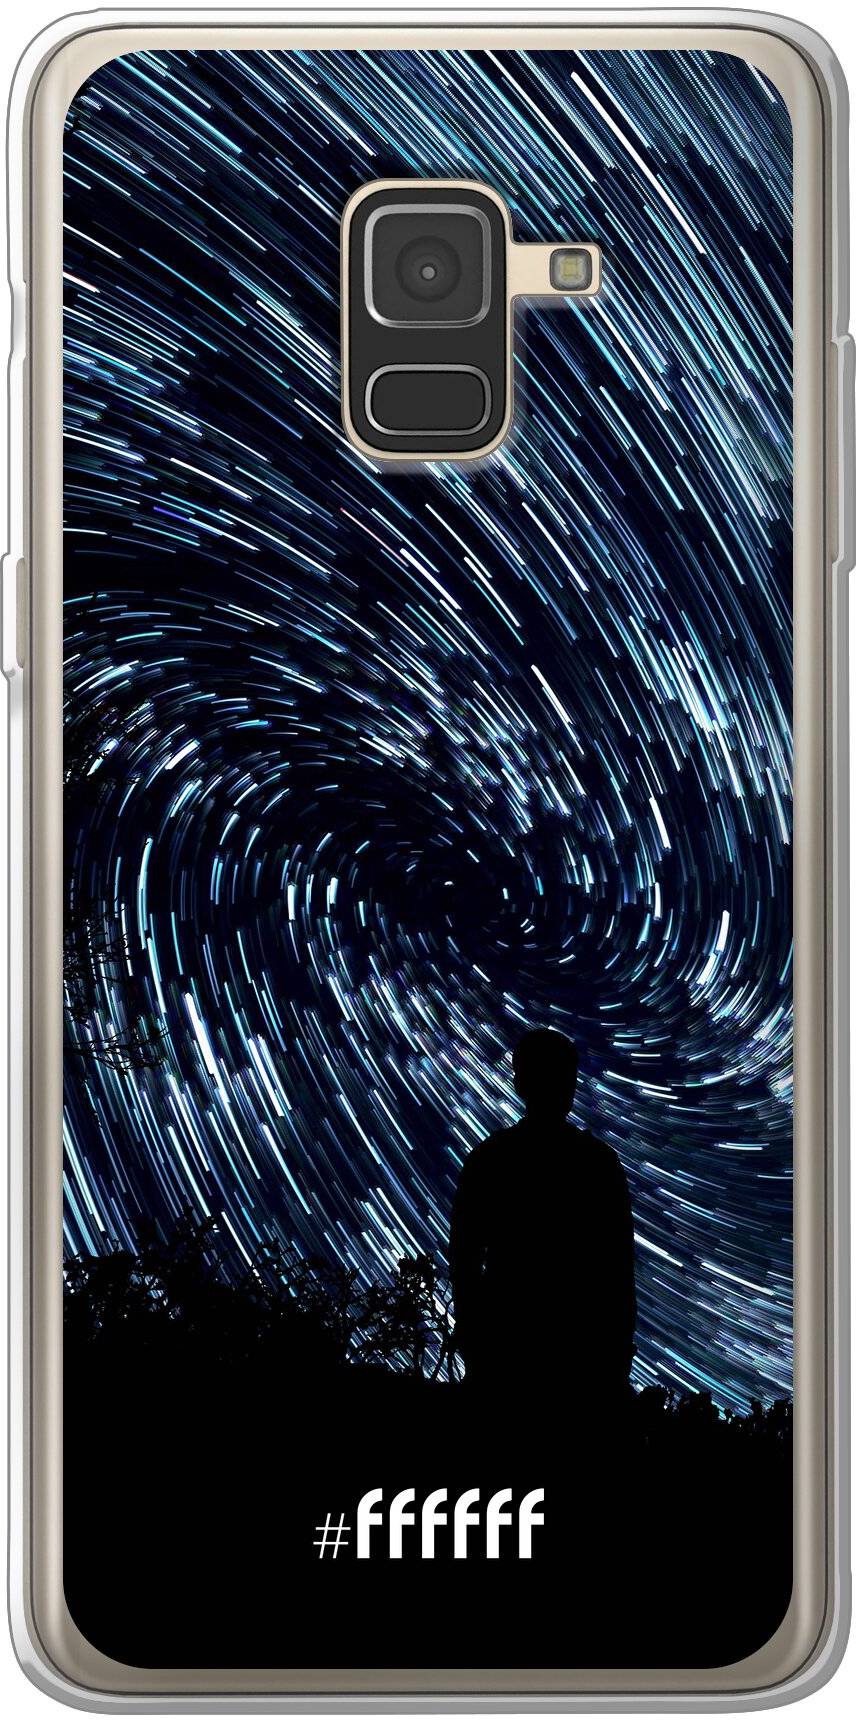 Starry Circles Galaxy A8 (2018)